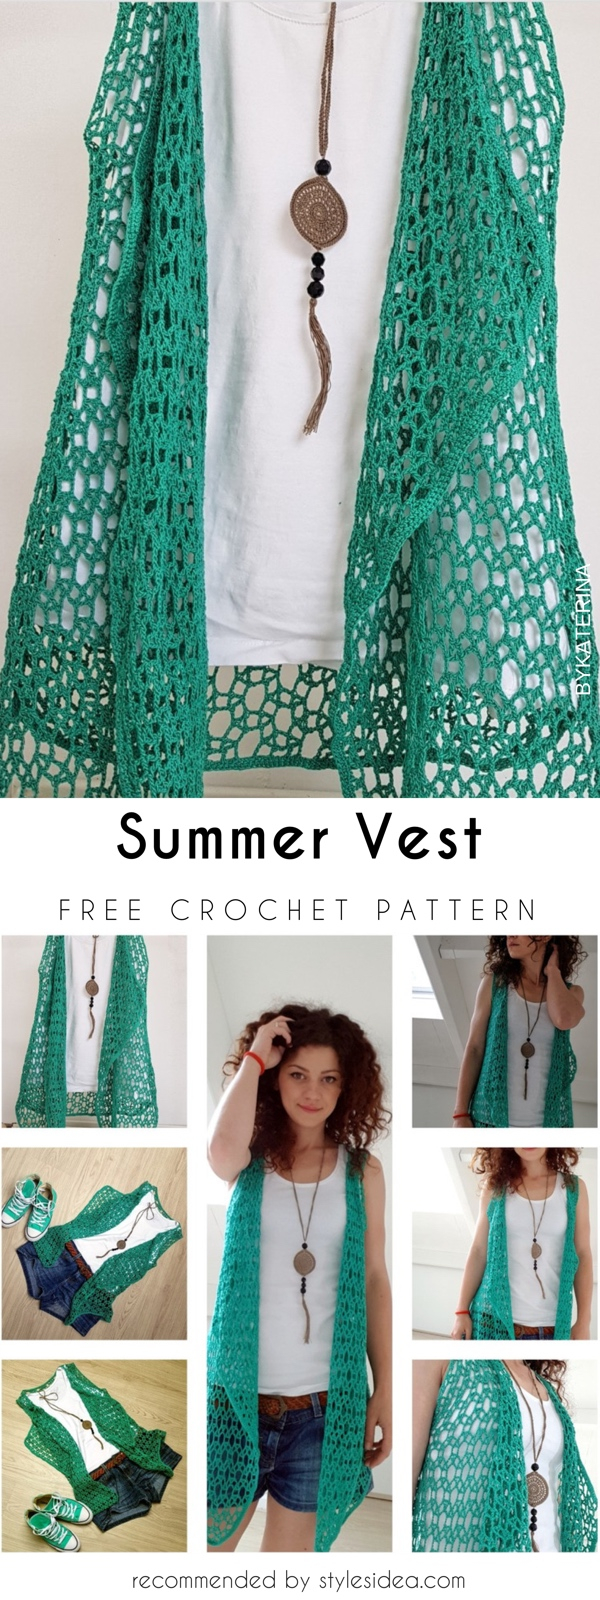 Crochet Vest Patterns Summer Vest Crochet Pattern Free Styles Idea